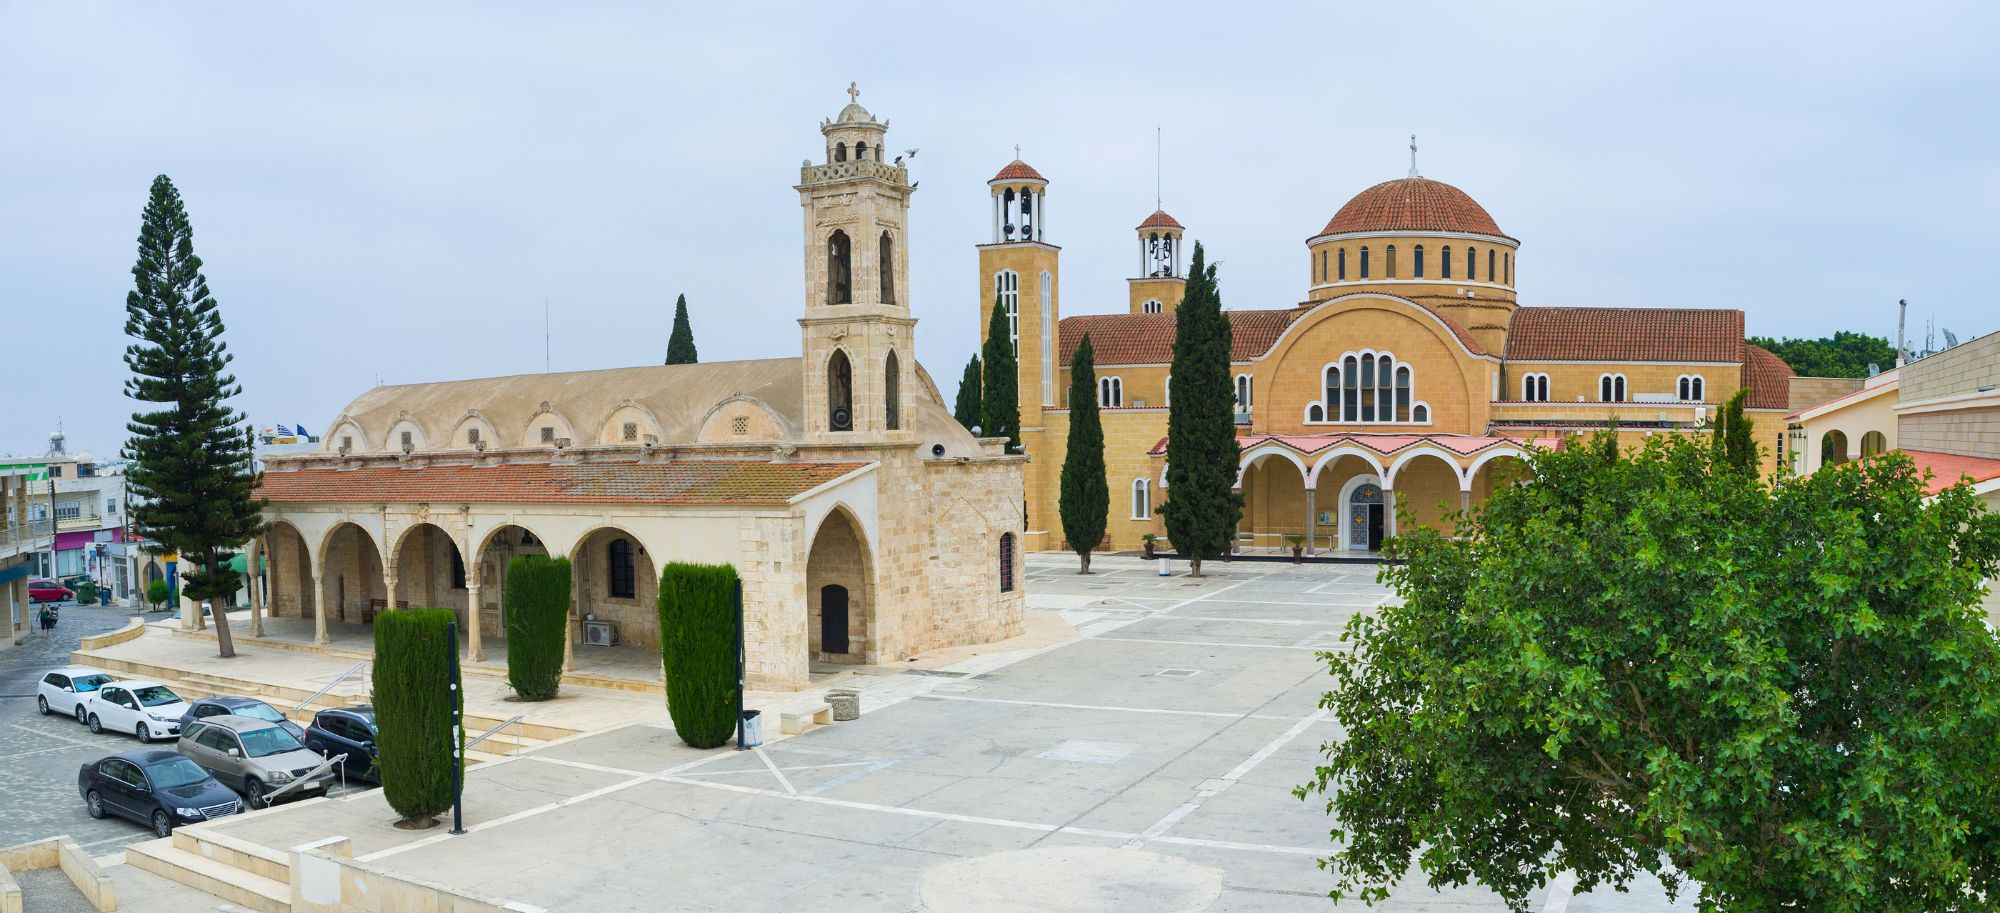 the cathedral squarejpg Χώροι δεξιώσεων